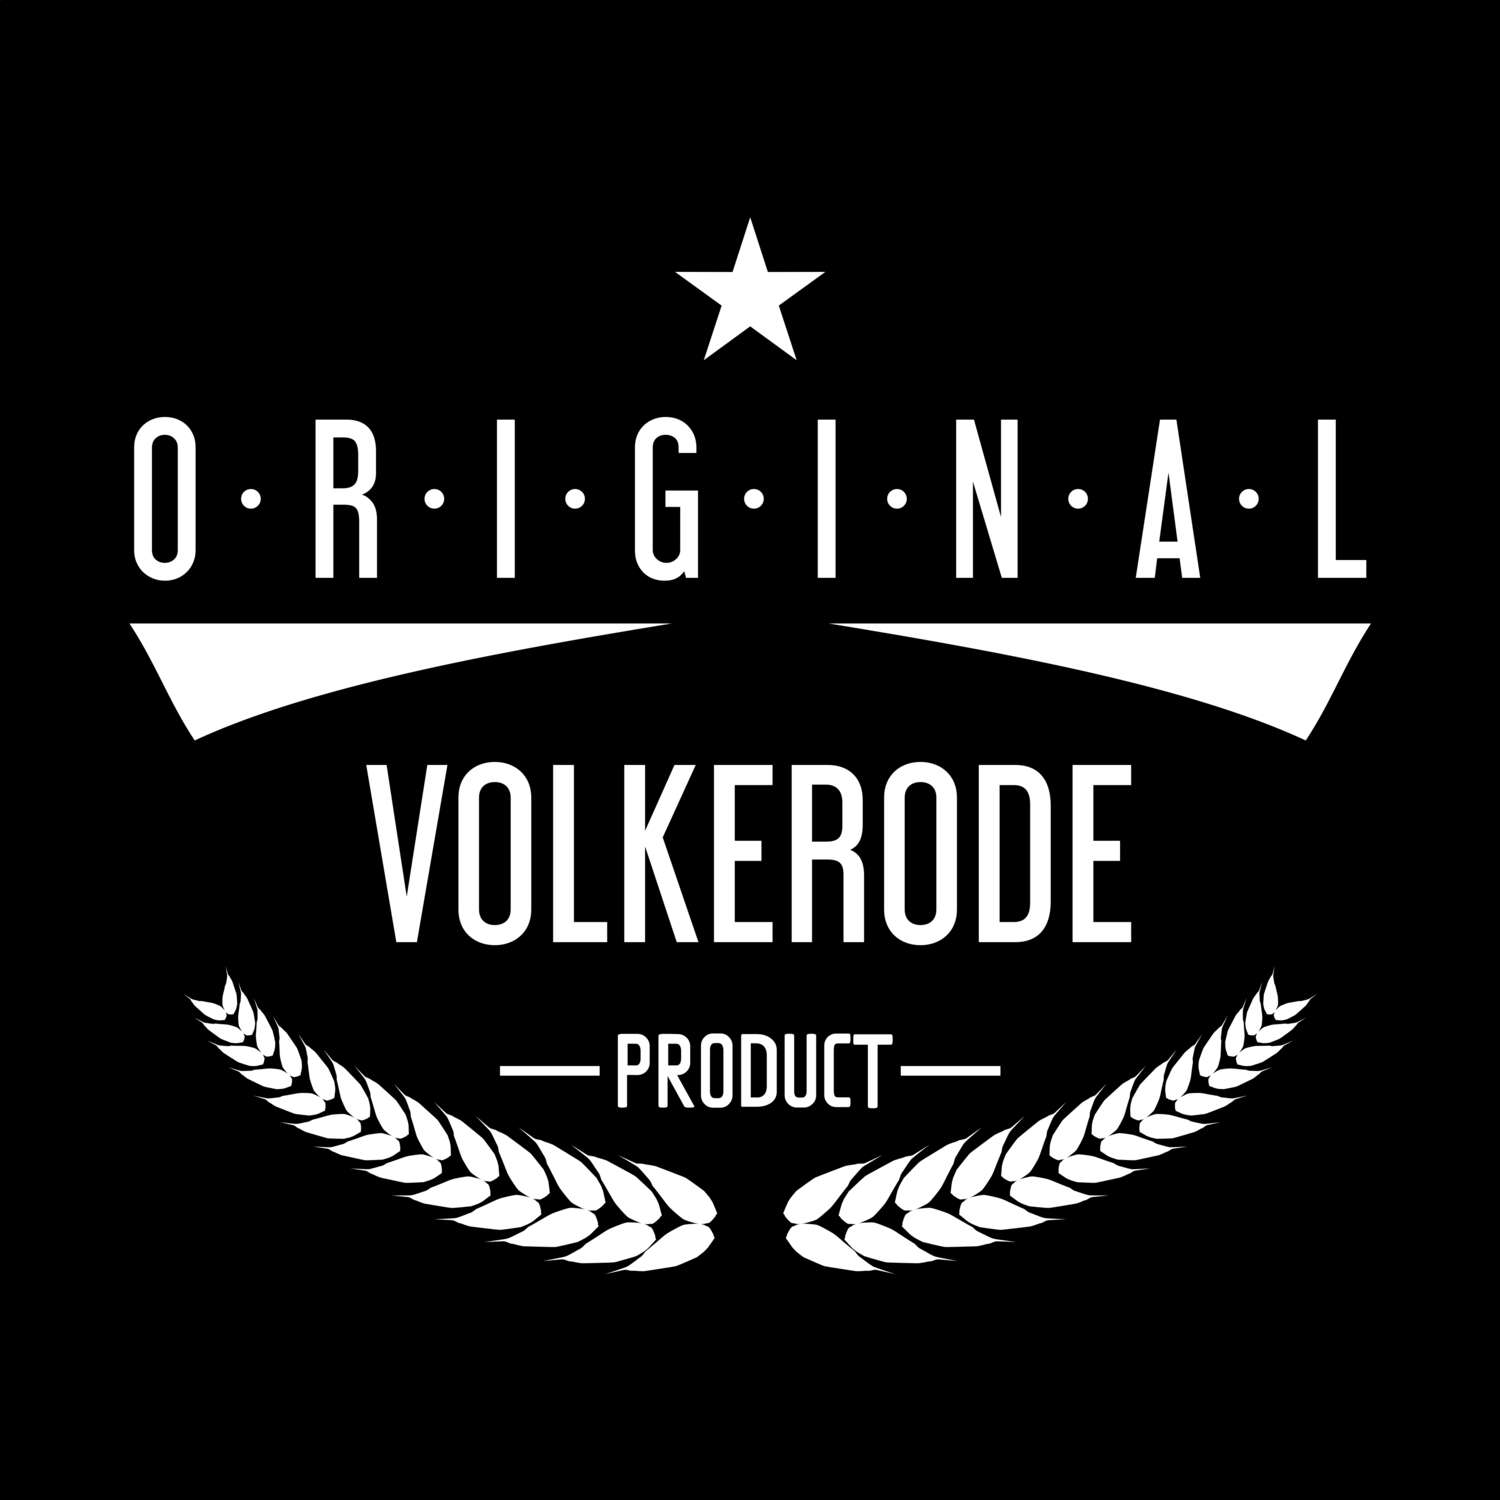 Volkerode T-Shirt »Original Product«